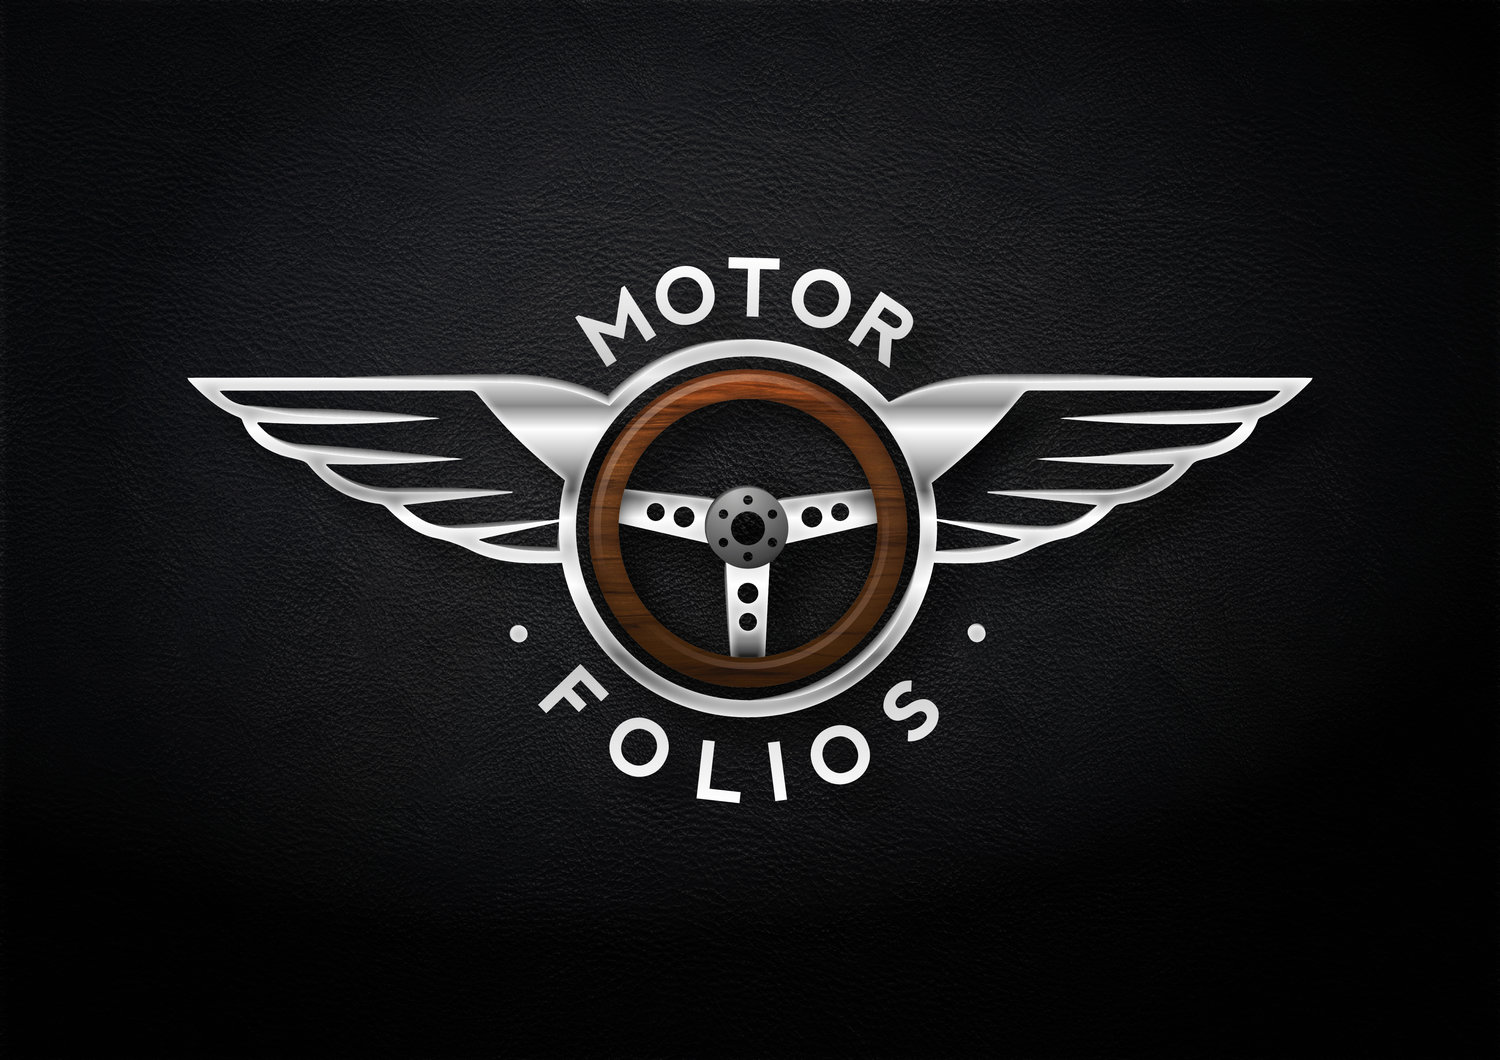 www.motorfolios.com